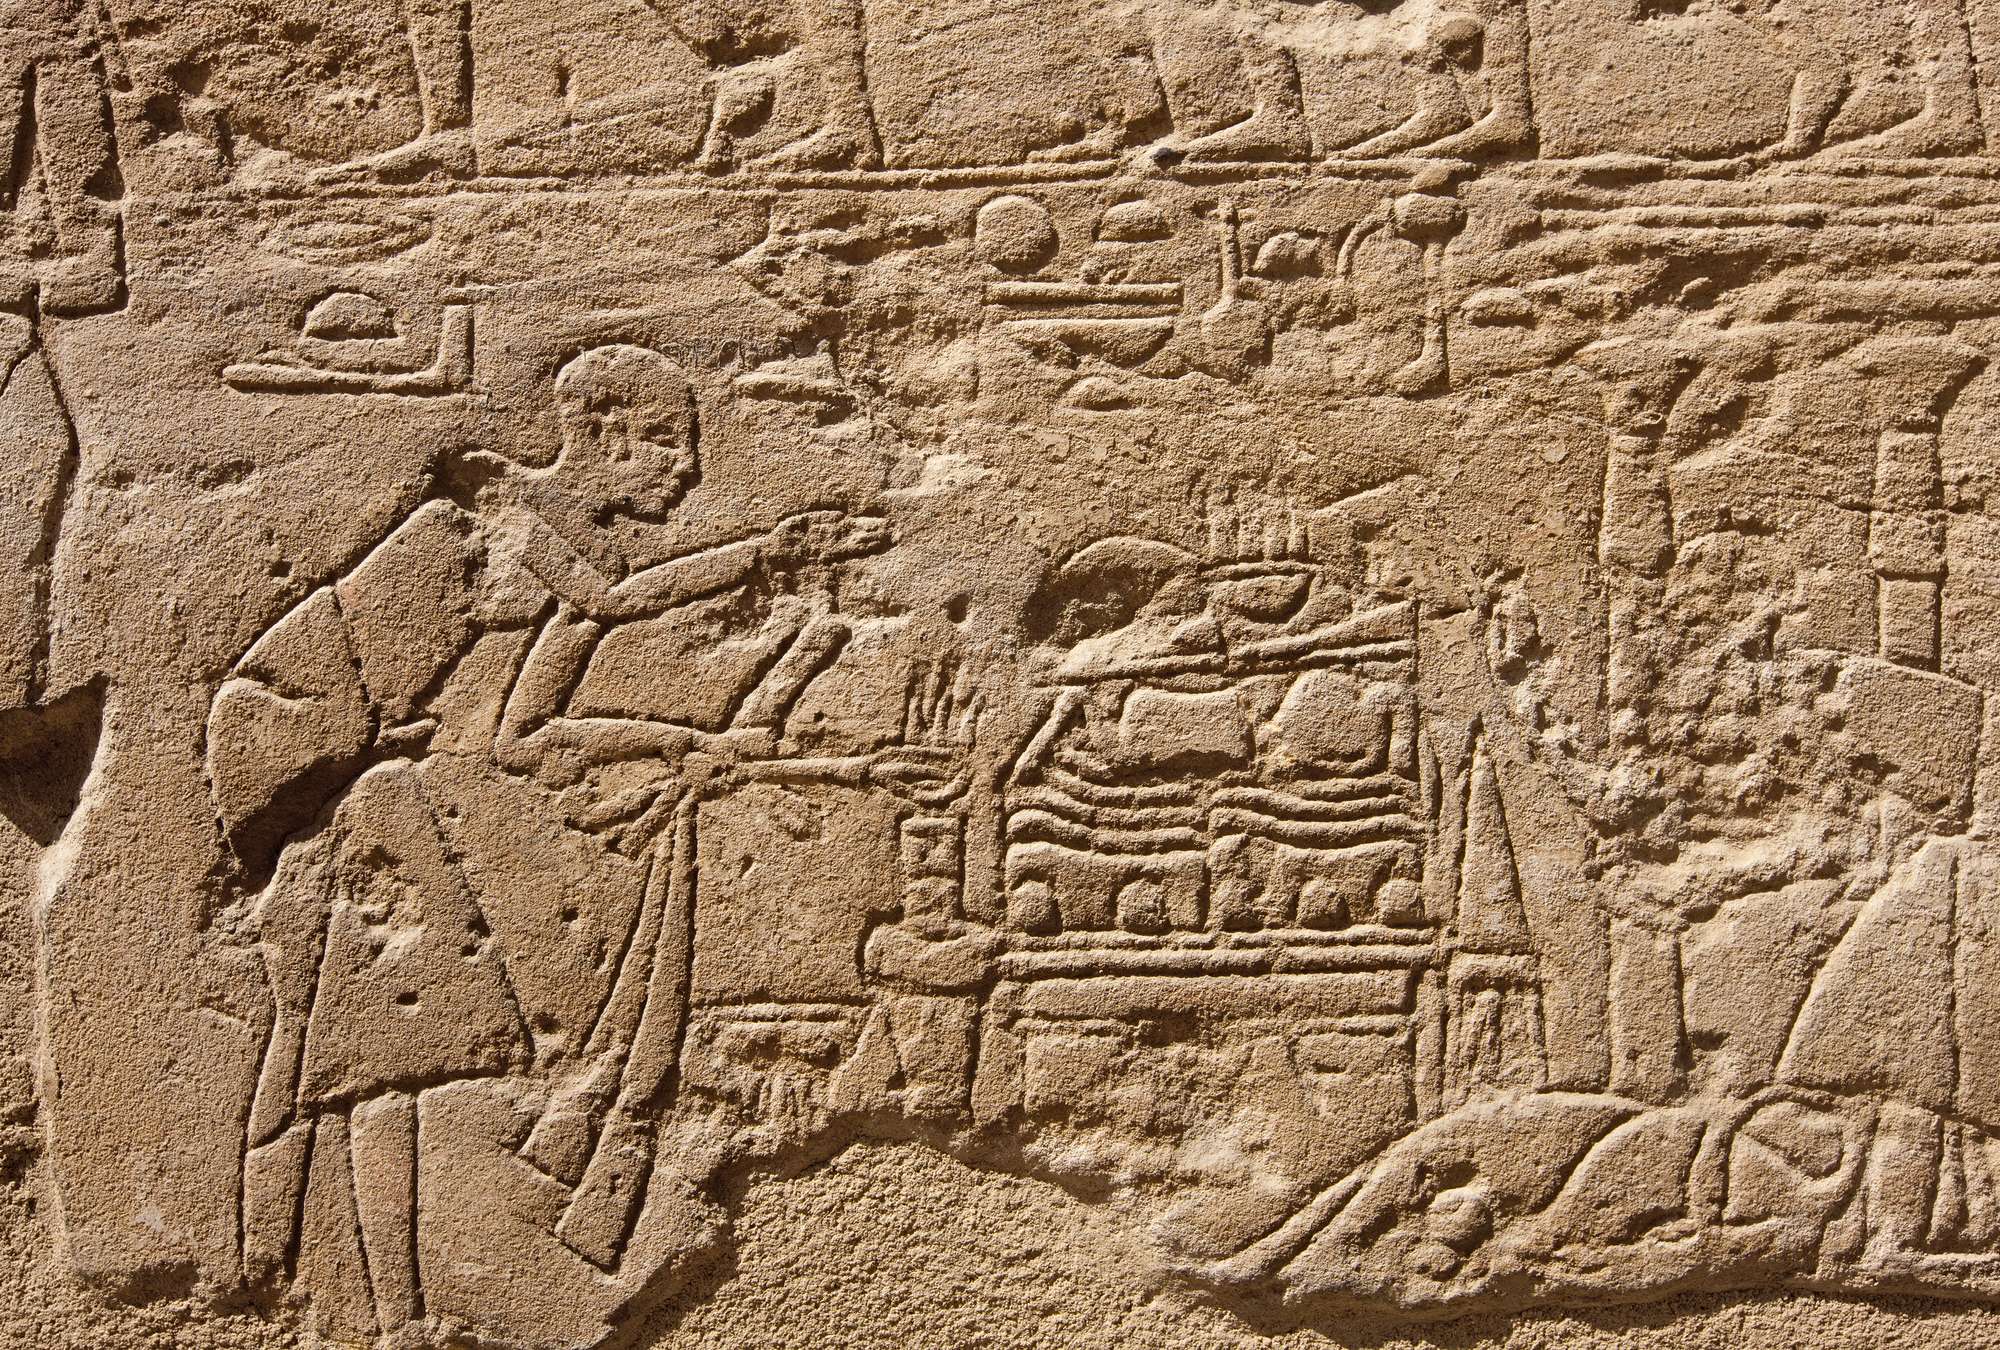             Fototapete mit antiker ägyptischer Steinmalerei
        